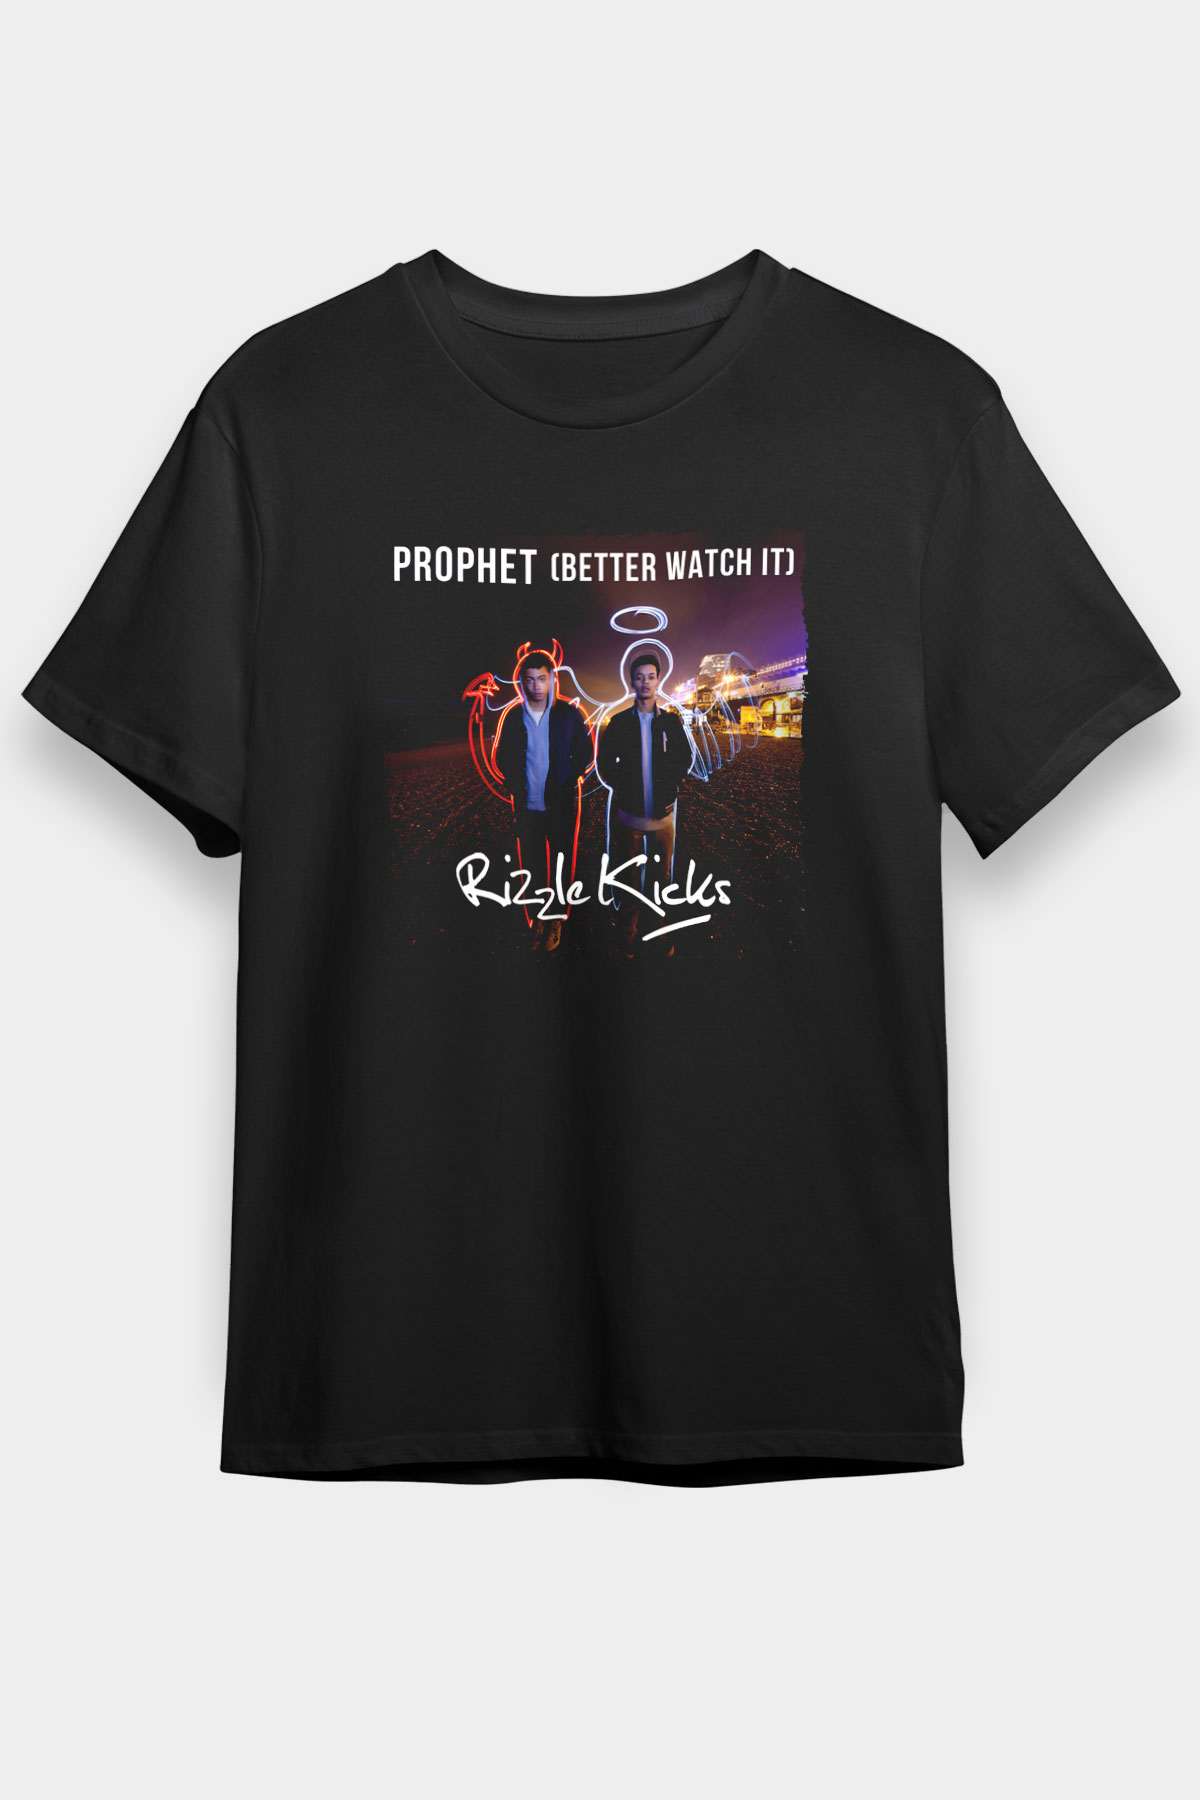 Rizzle Kicks T shirt,Hip Hop,Rap Tshirt 02/